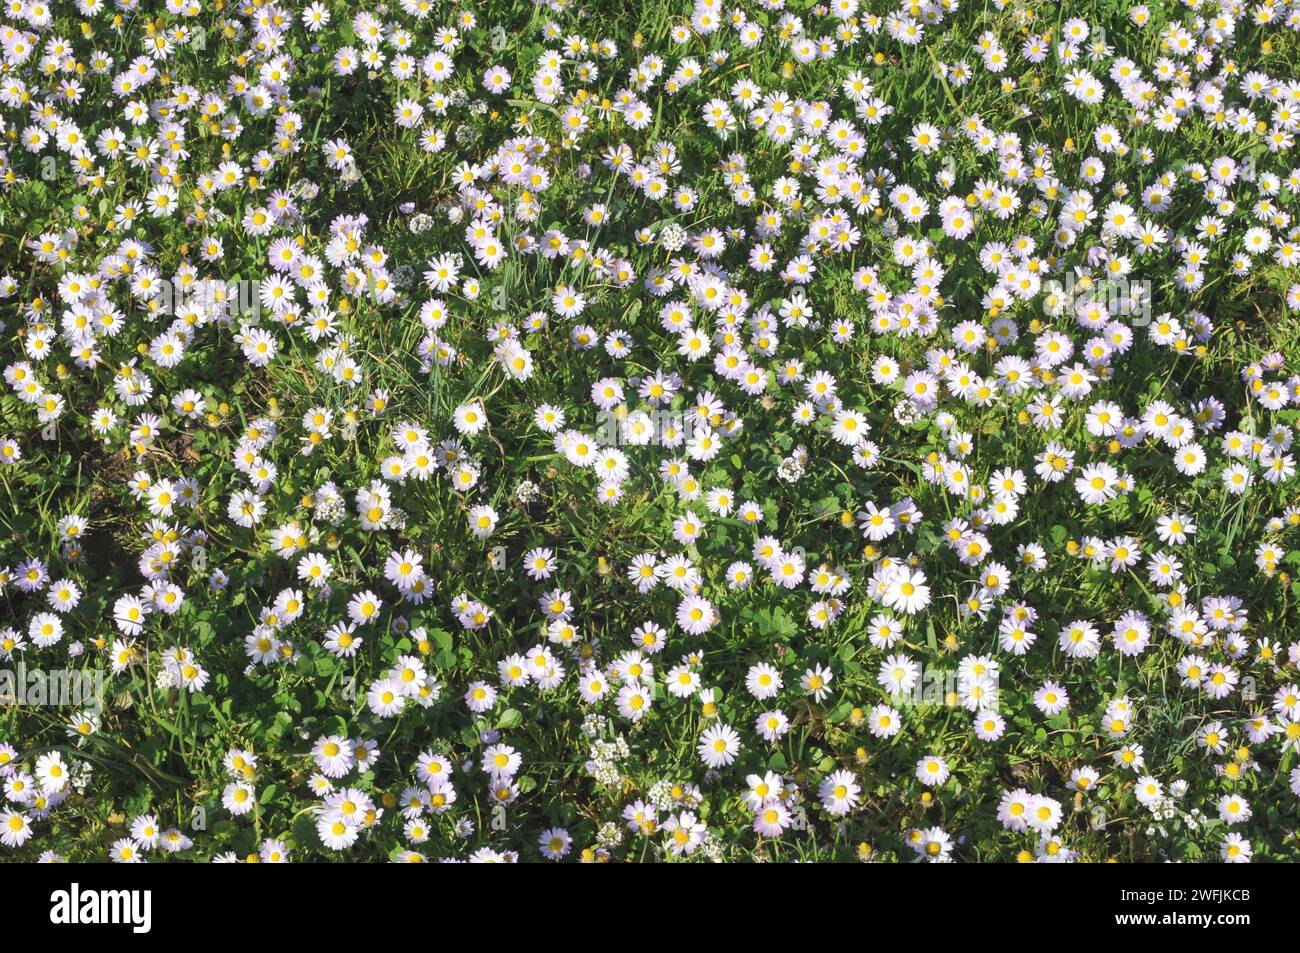 Annual daisy (Bellis annua) is an annual herb native to Mediterranean Basin. This photo was taken in Menorca, Balearic Islands, Spain. Stock Photo